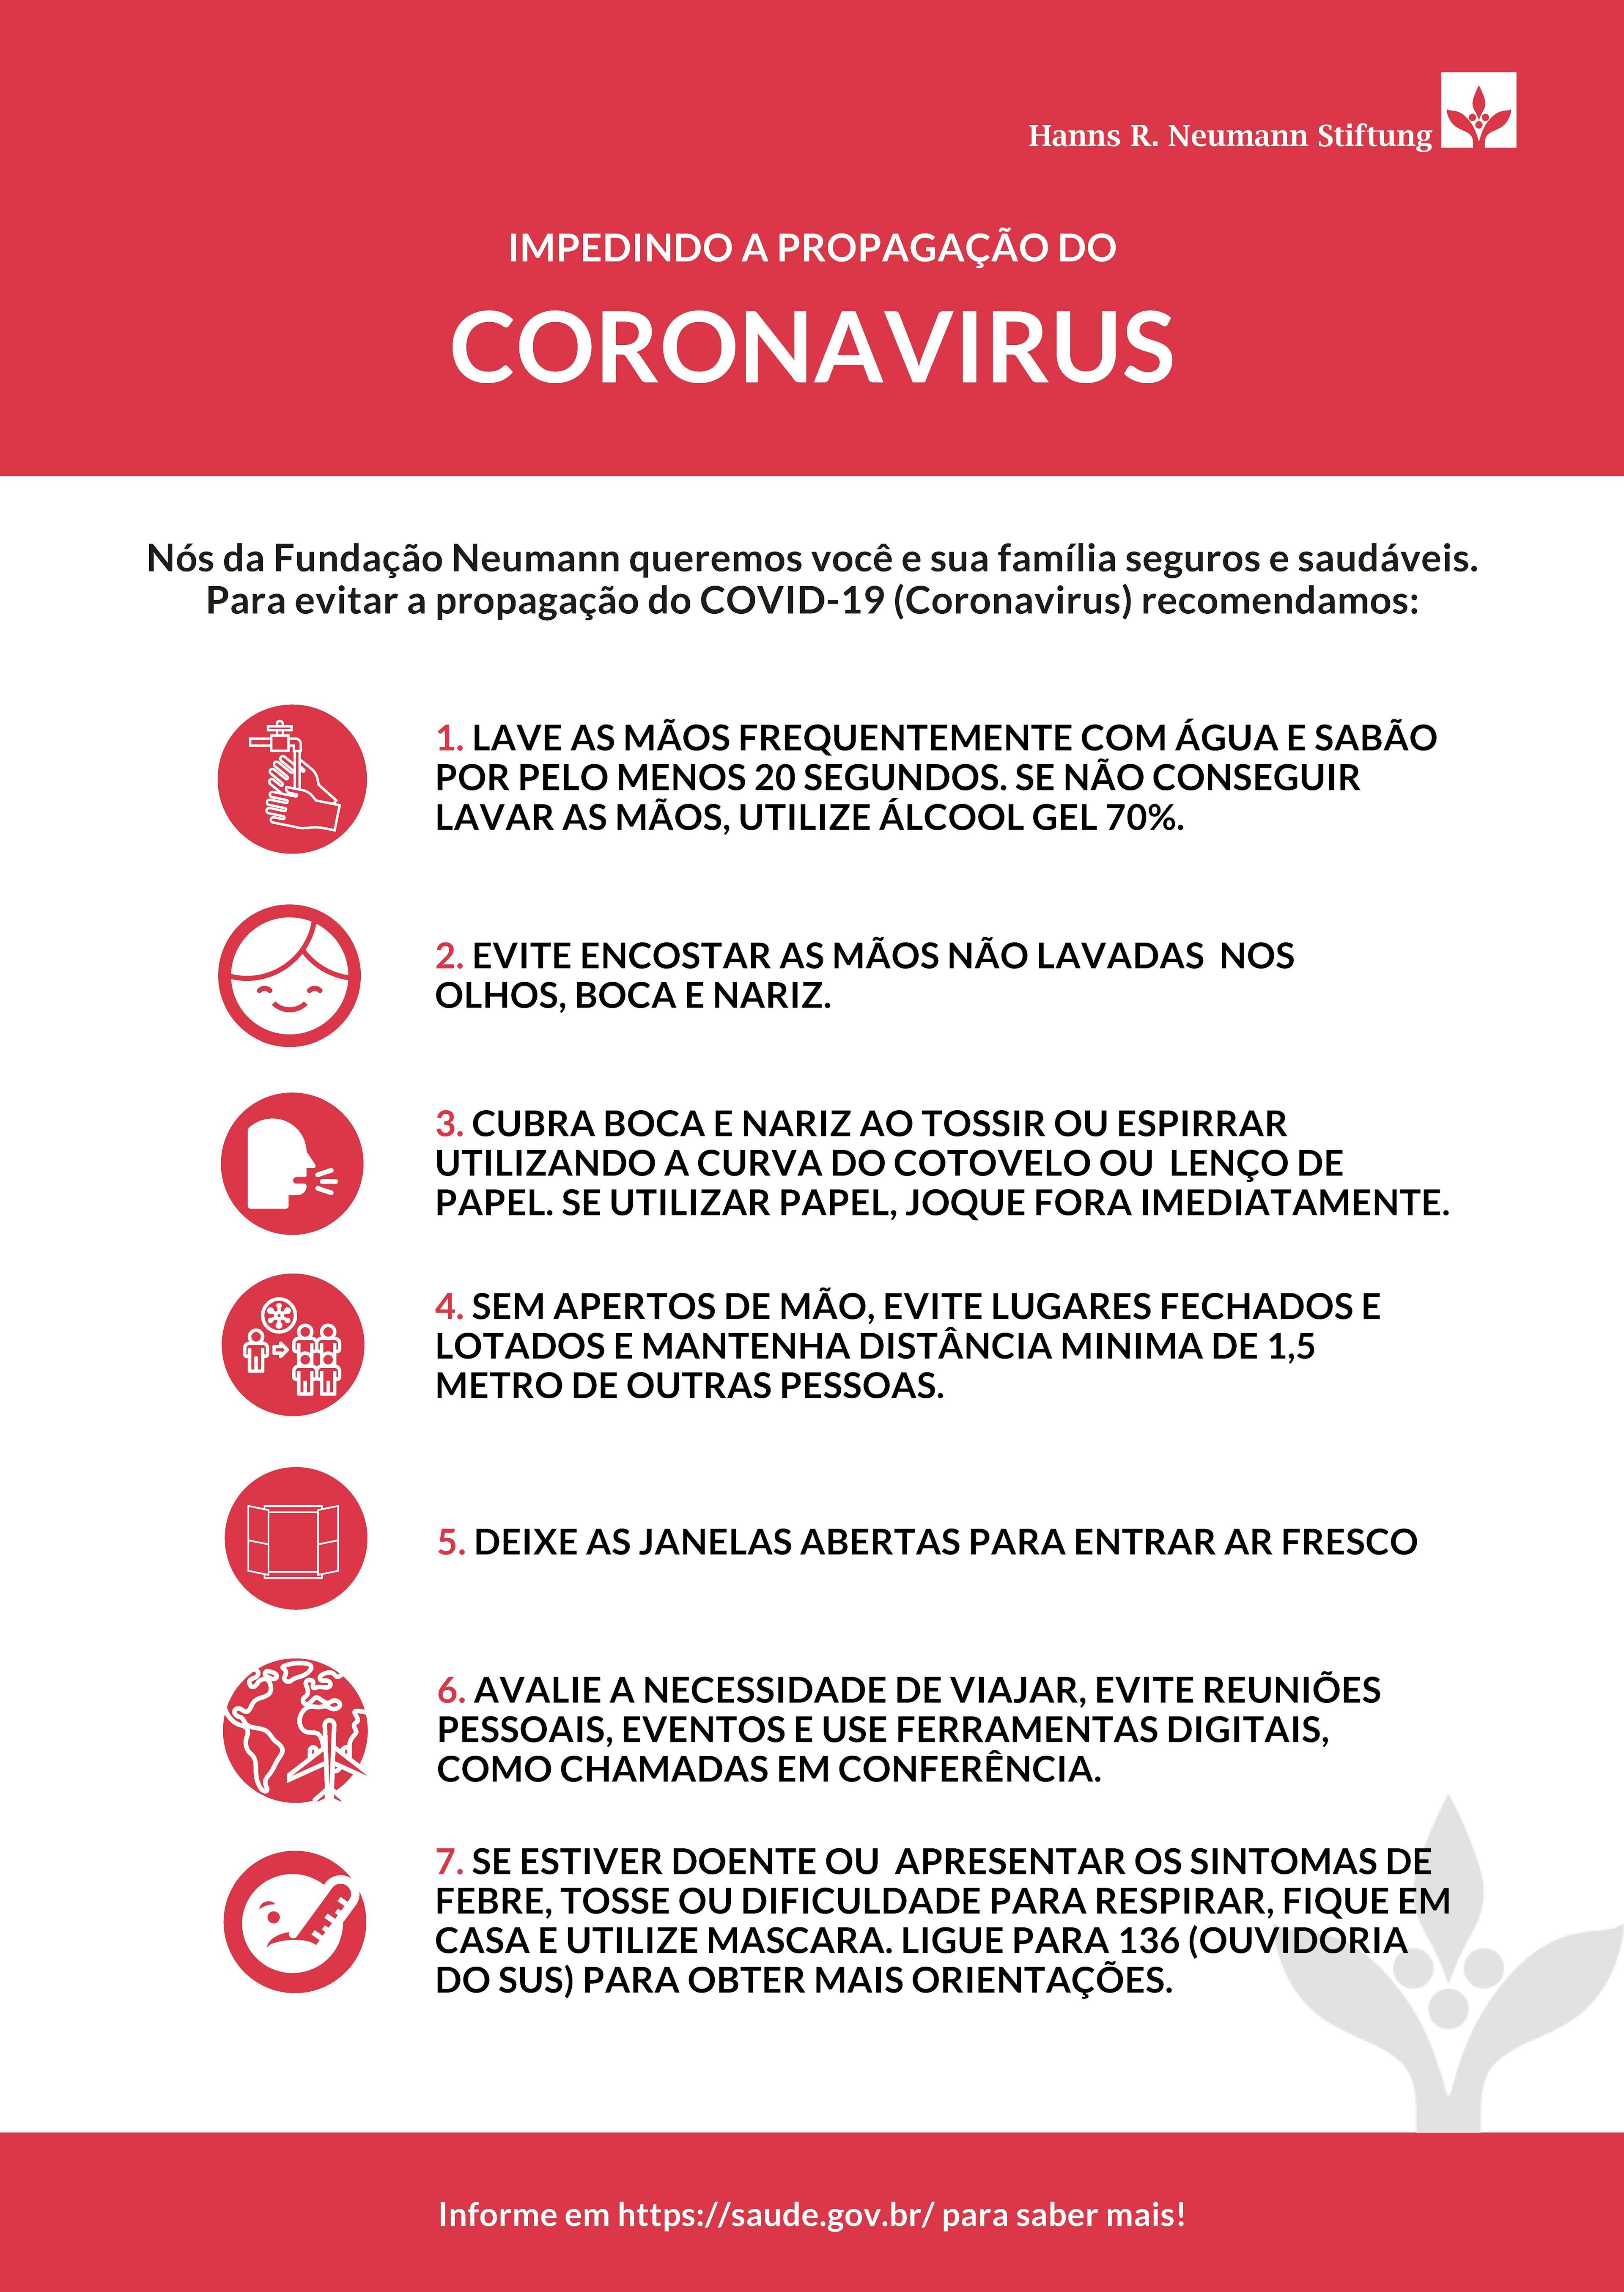 Preventing the spread of Coronavirus in Portugese